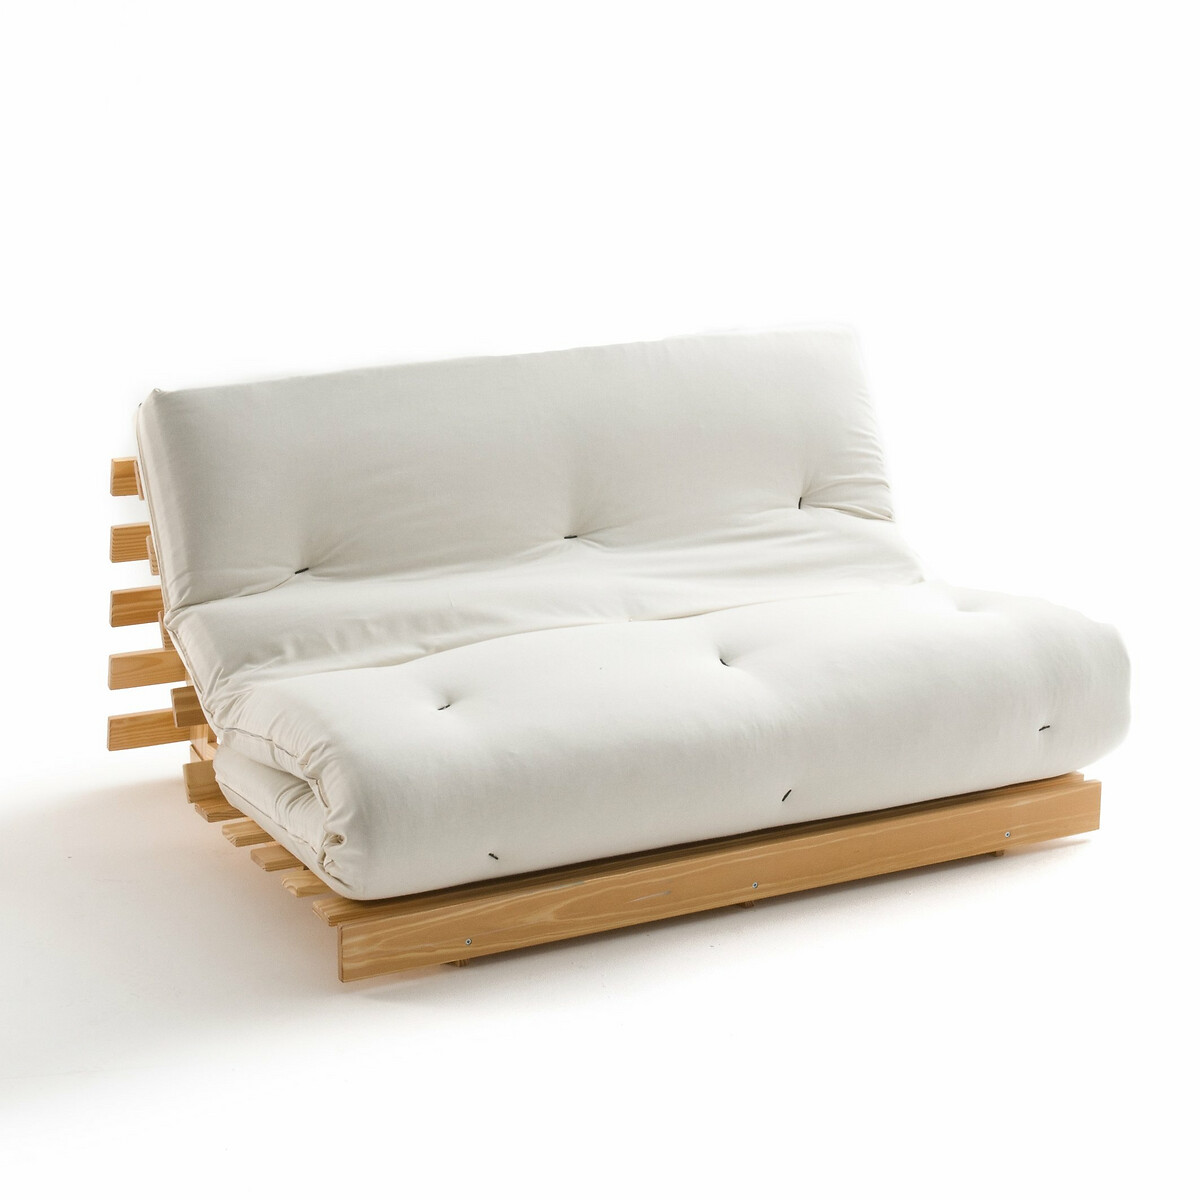 Матрас-футон LaRedoute Latex для дивана THA 90 x 190 см бежевый, размер 90 x 190 см